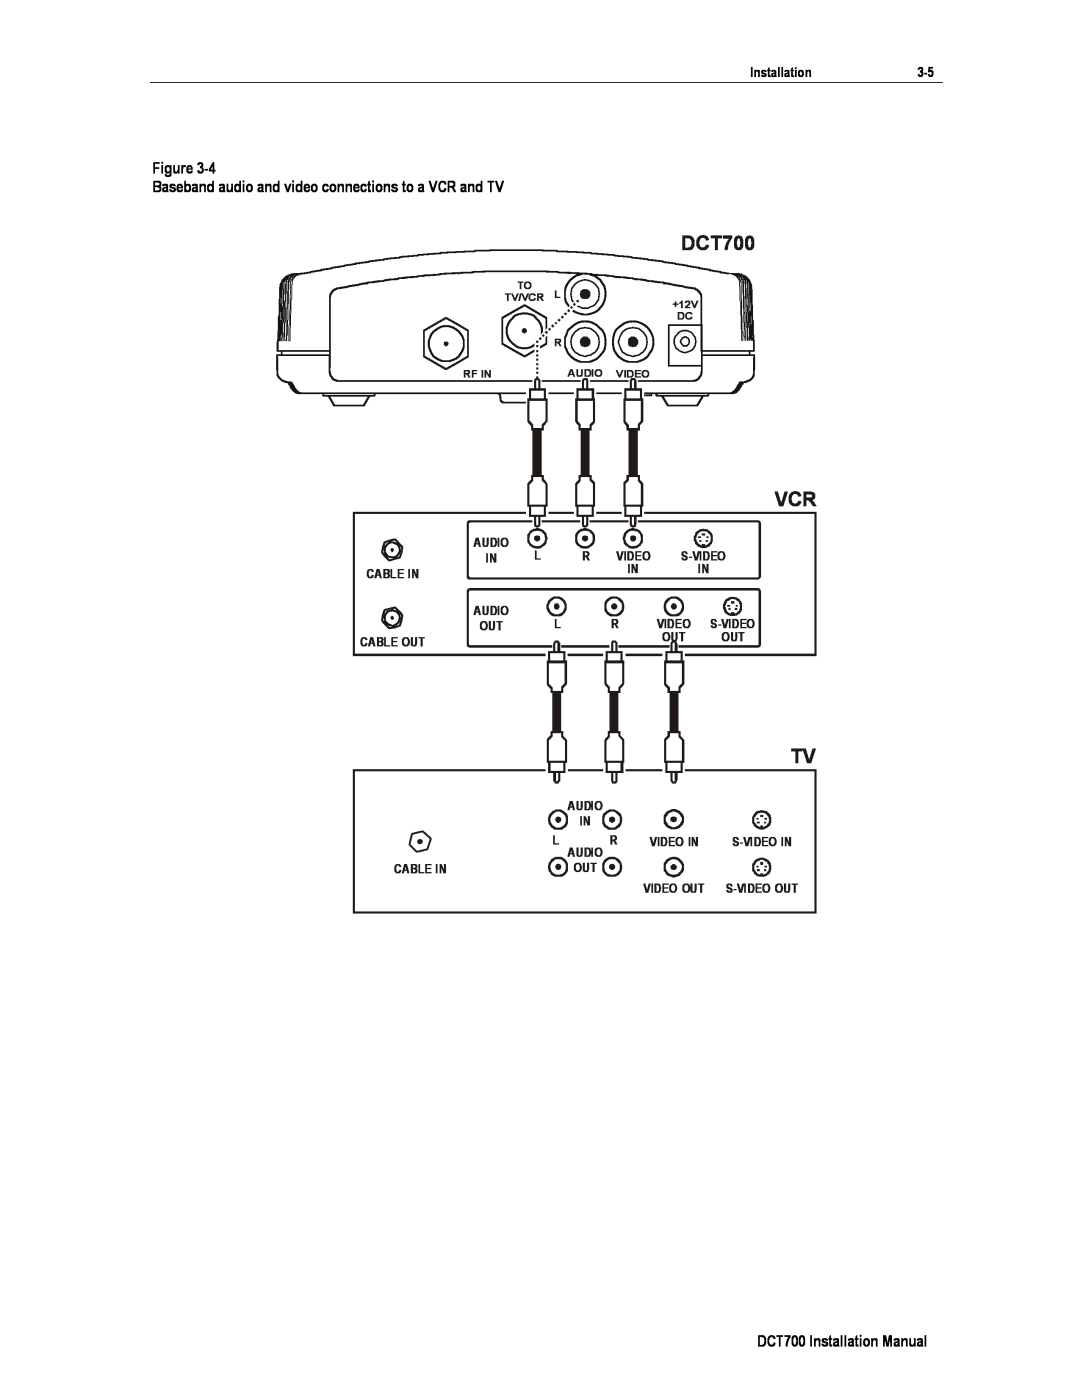 Motorola DTC700 installation manual Figure, DCT700 Installation Manual 